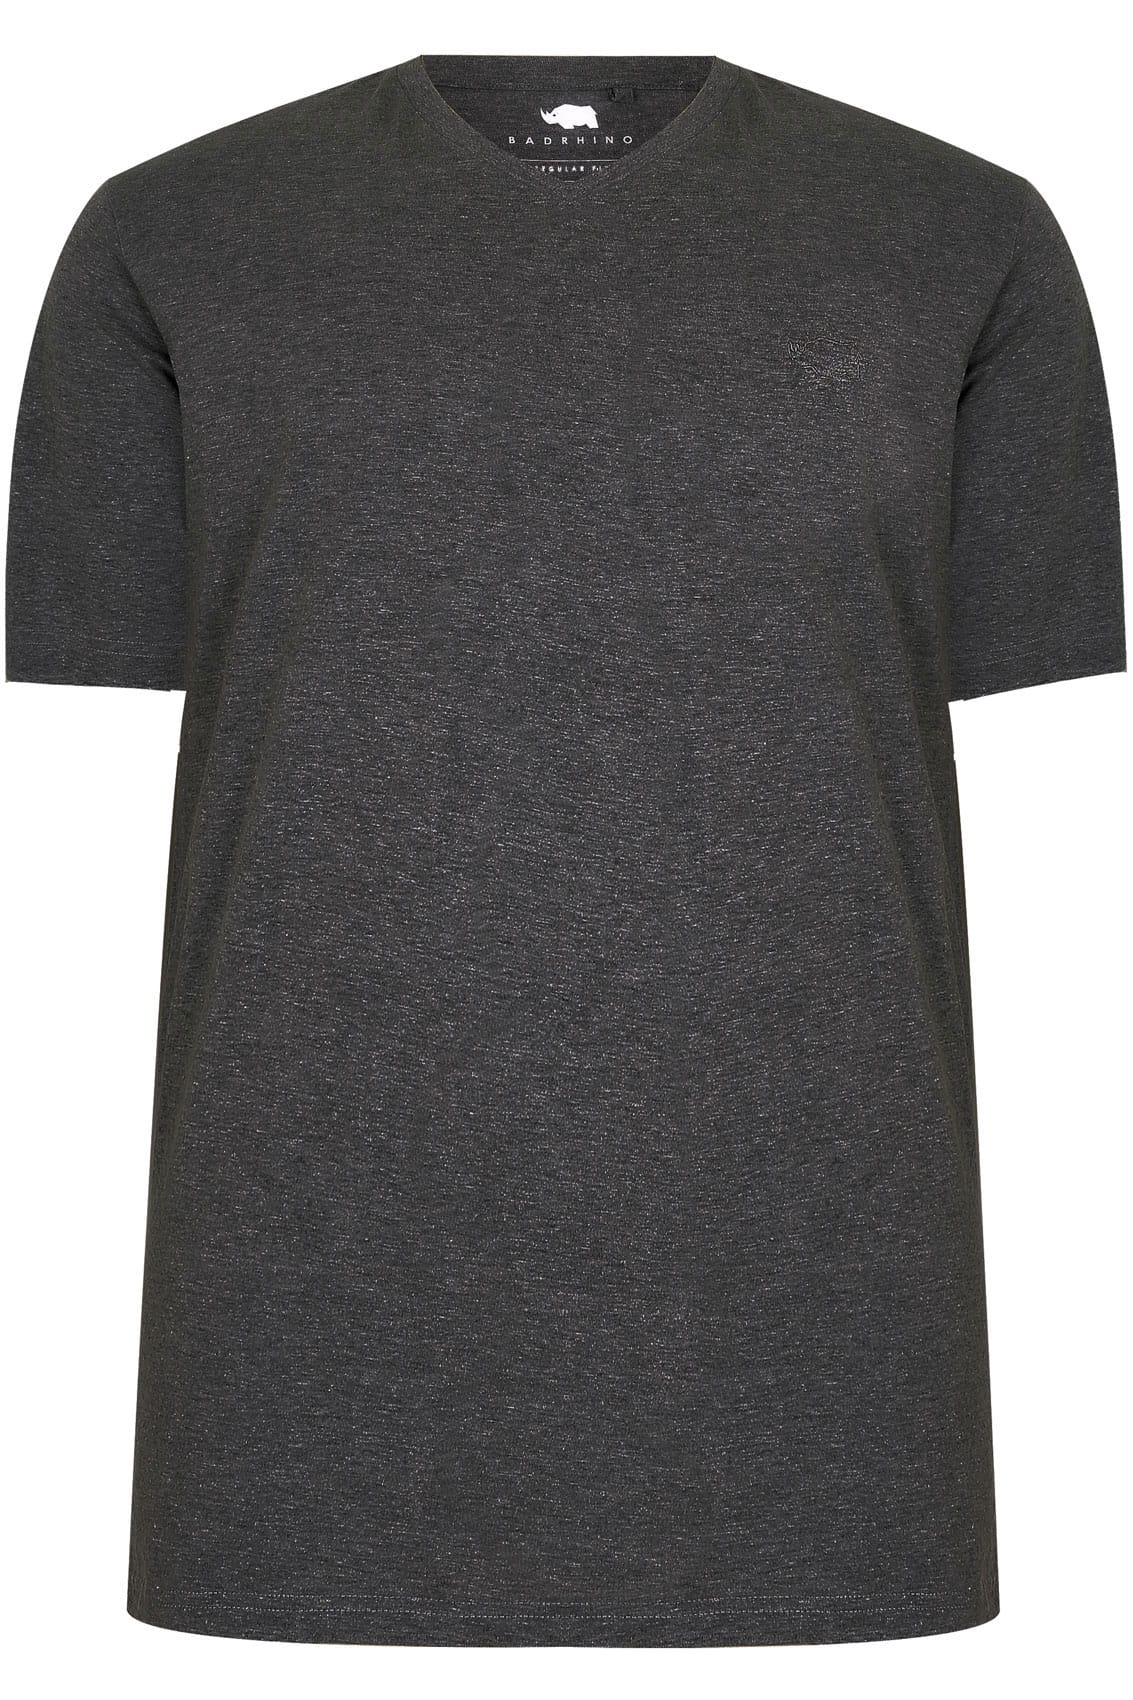 BadRhino Charcoal Grey V-Neck Basic T-Shirt